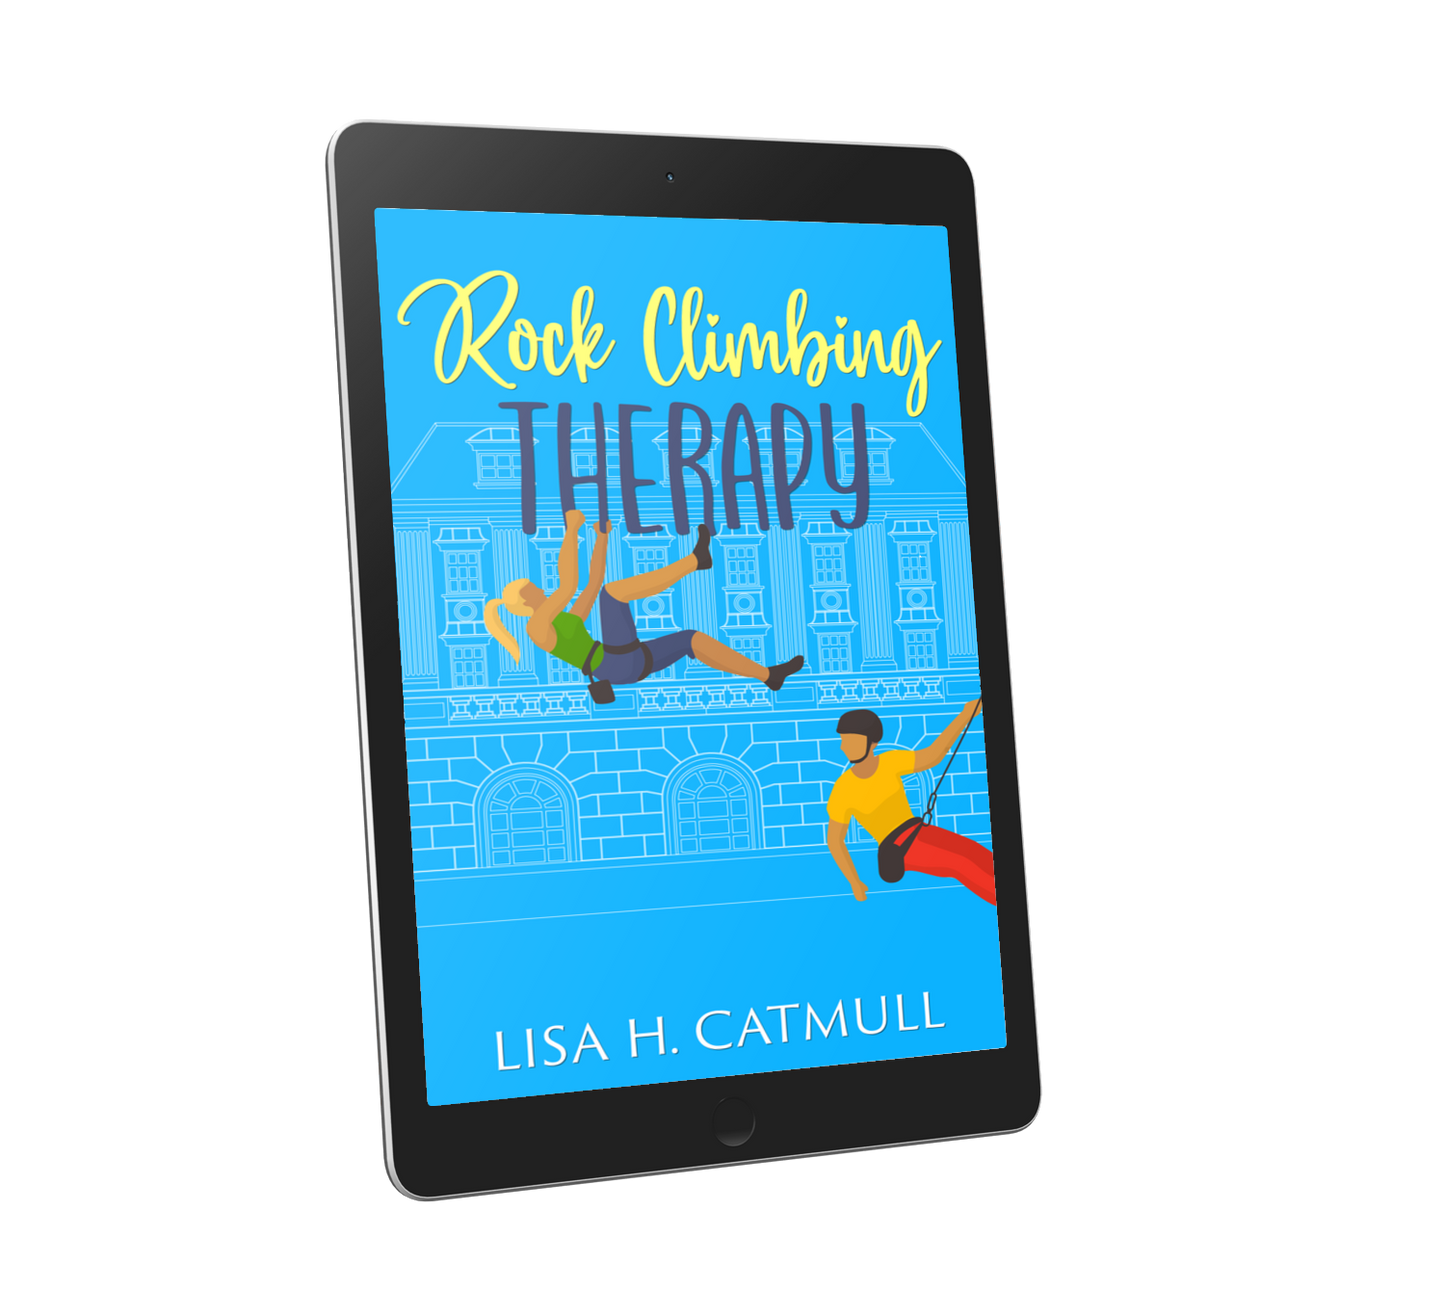 Rock Climbing Therapy (Book Three)